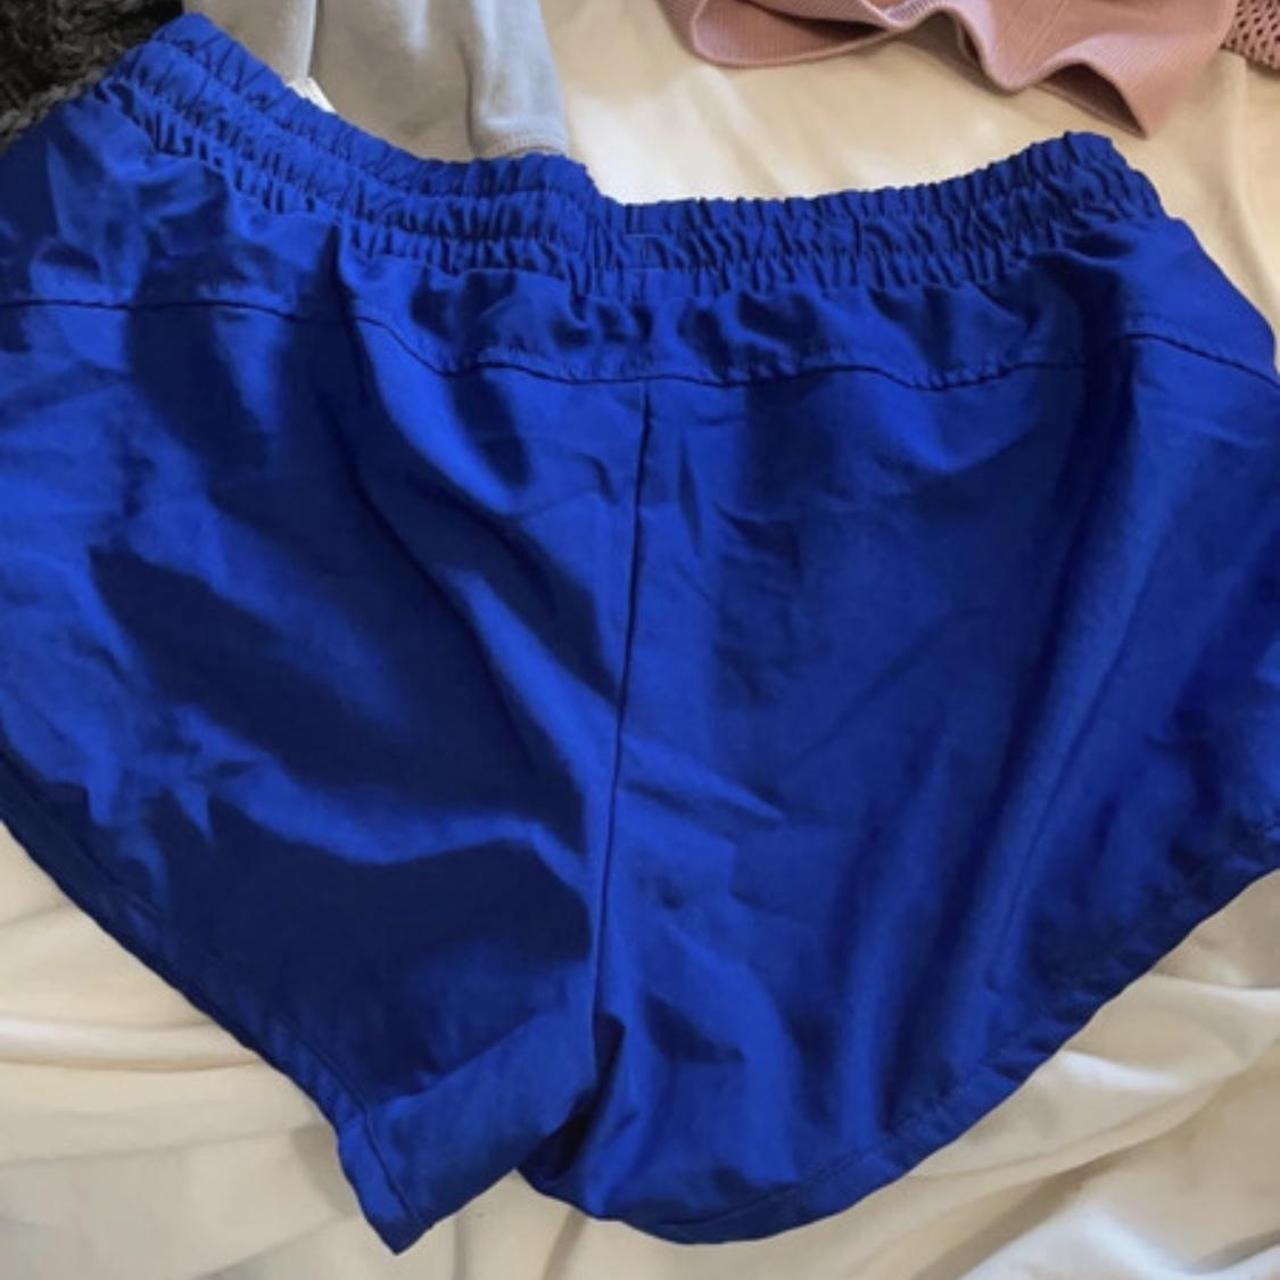 Royal blue puma shorts, mesh lining, short shorts - Depop